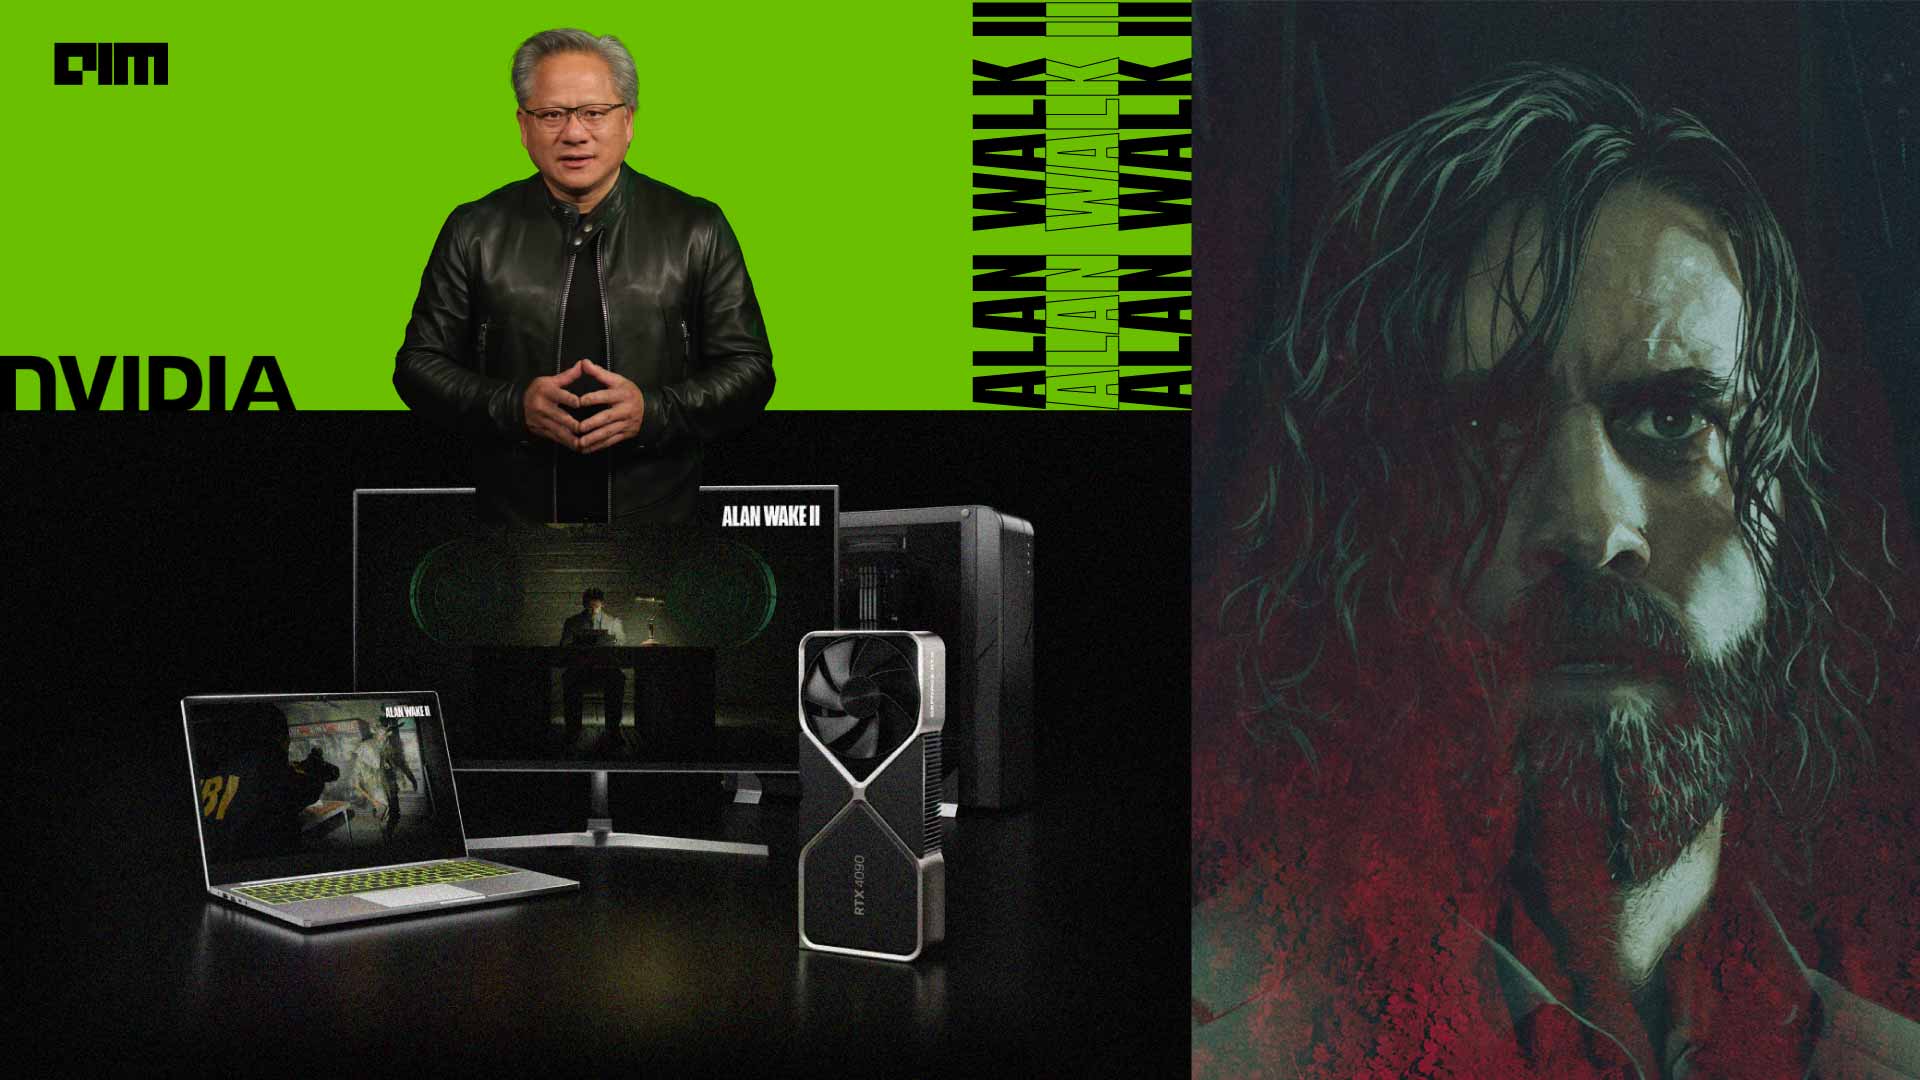 Alan Wake 2 Showcases the NVIDIA RTX Prowess